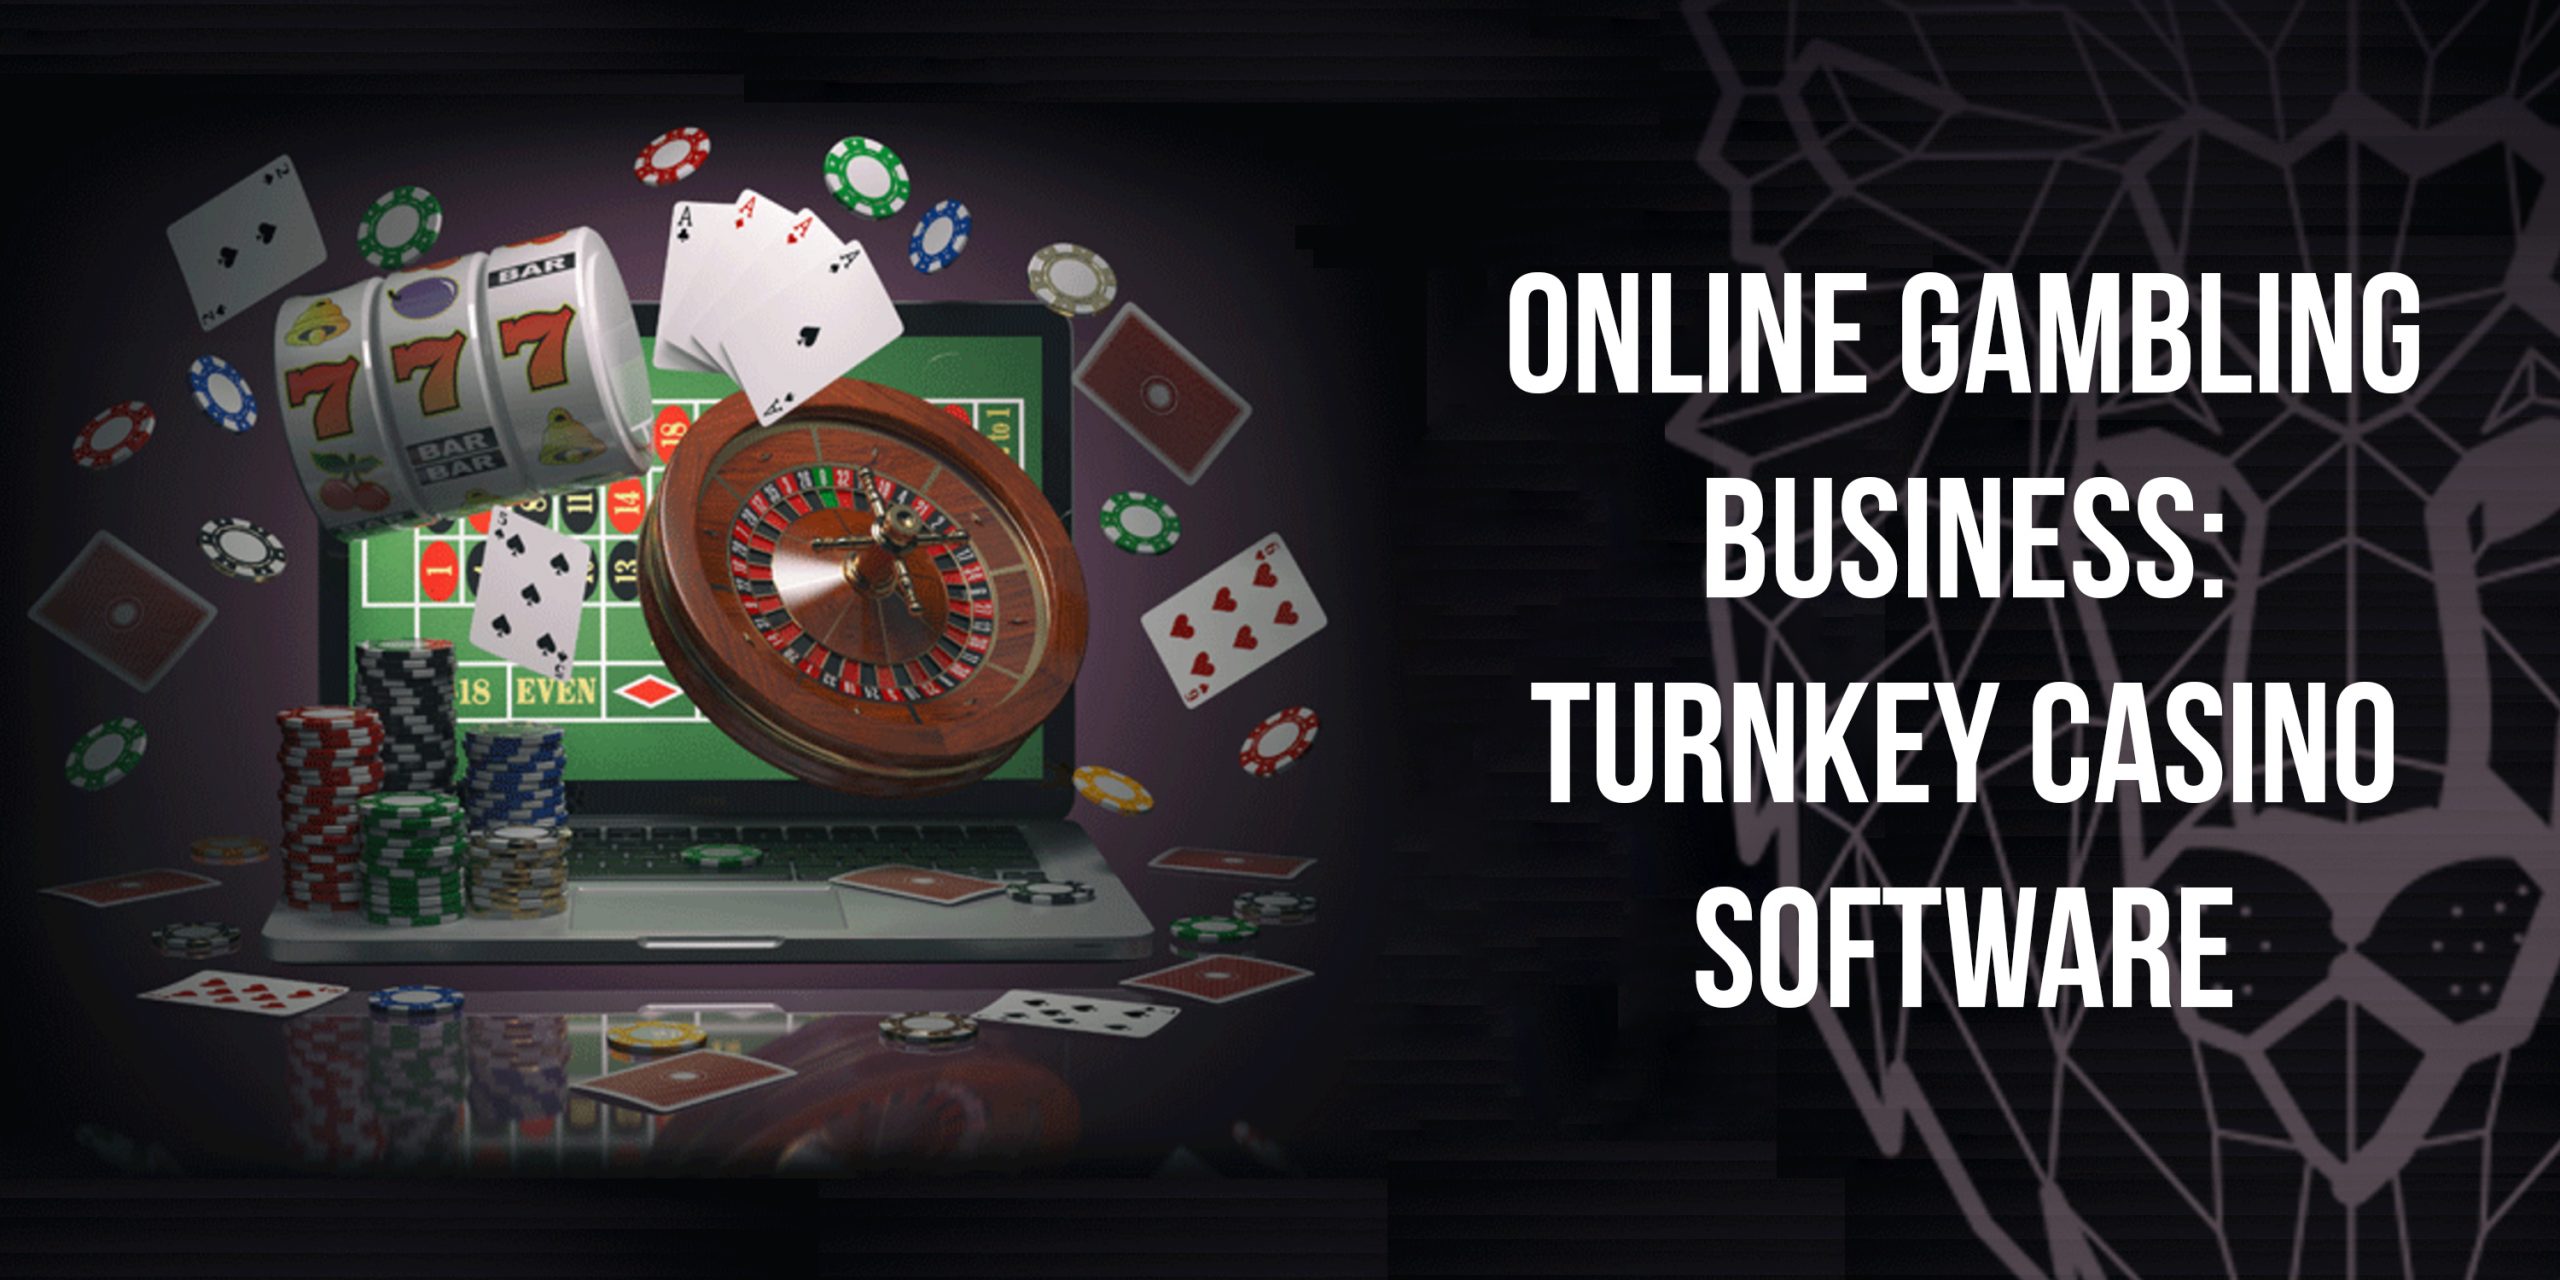 Mobile casino software, turnkey online casino, online gambling business, gambling software